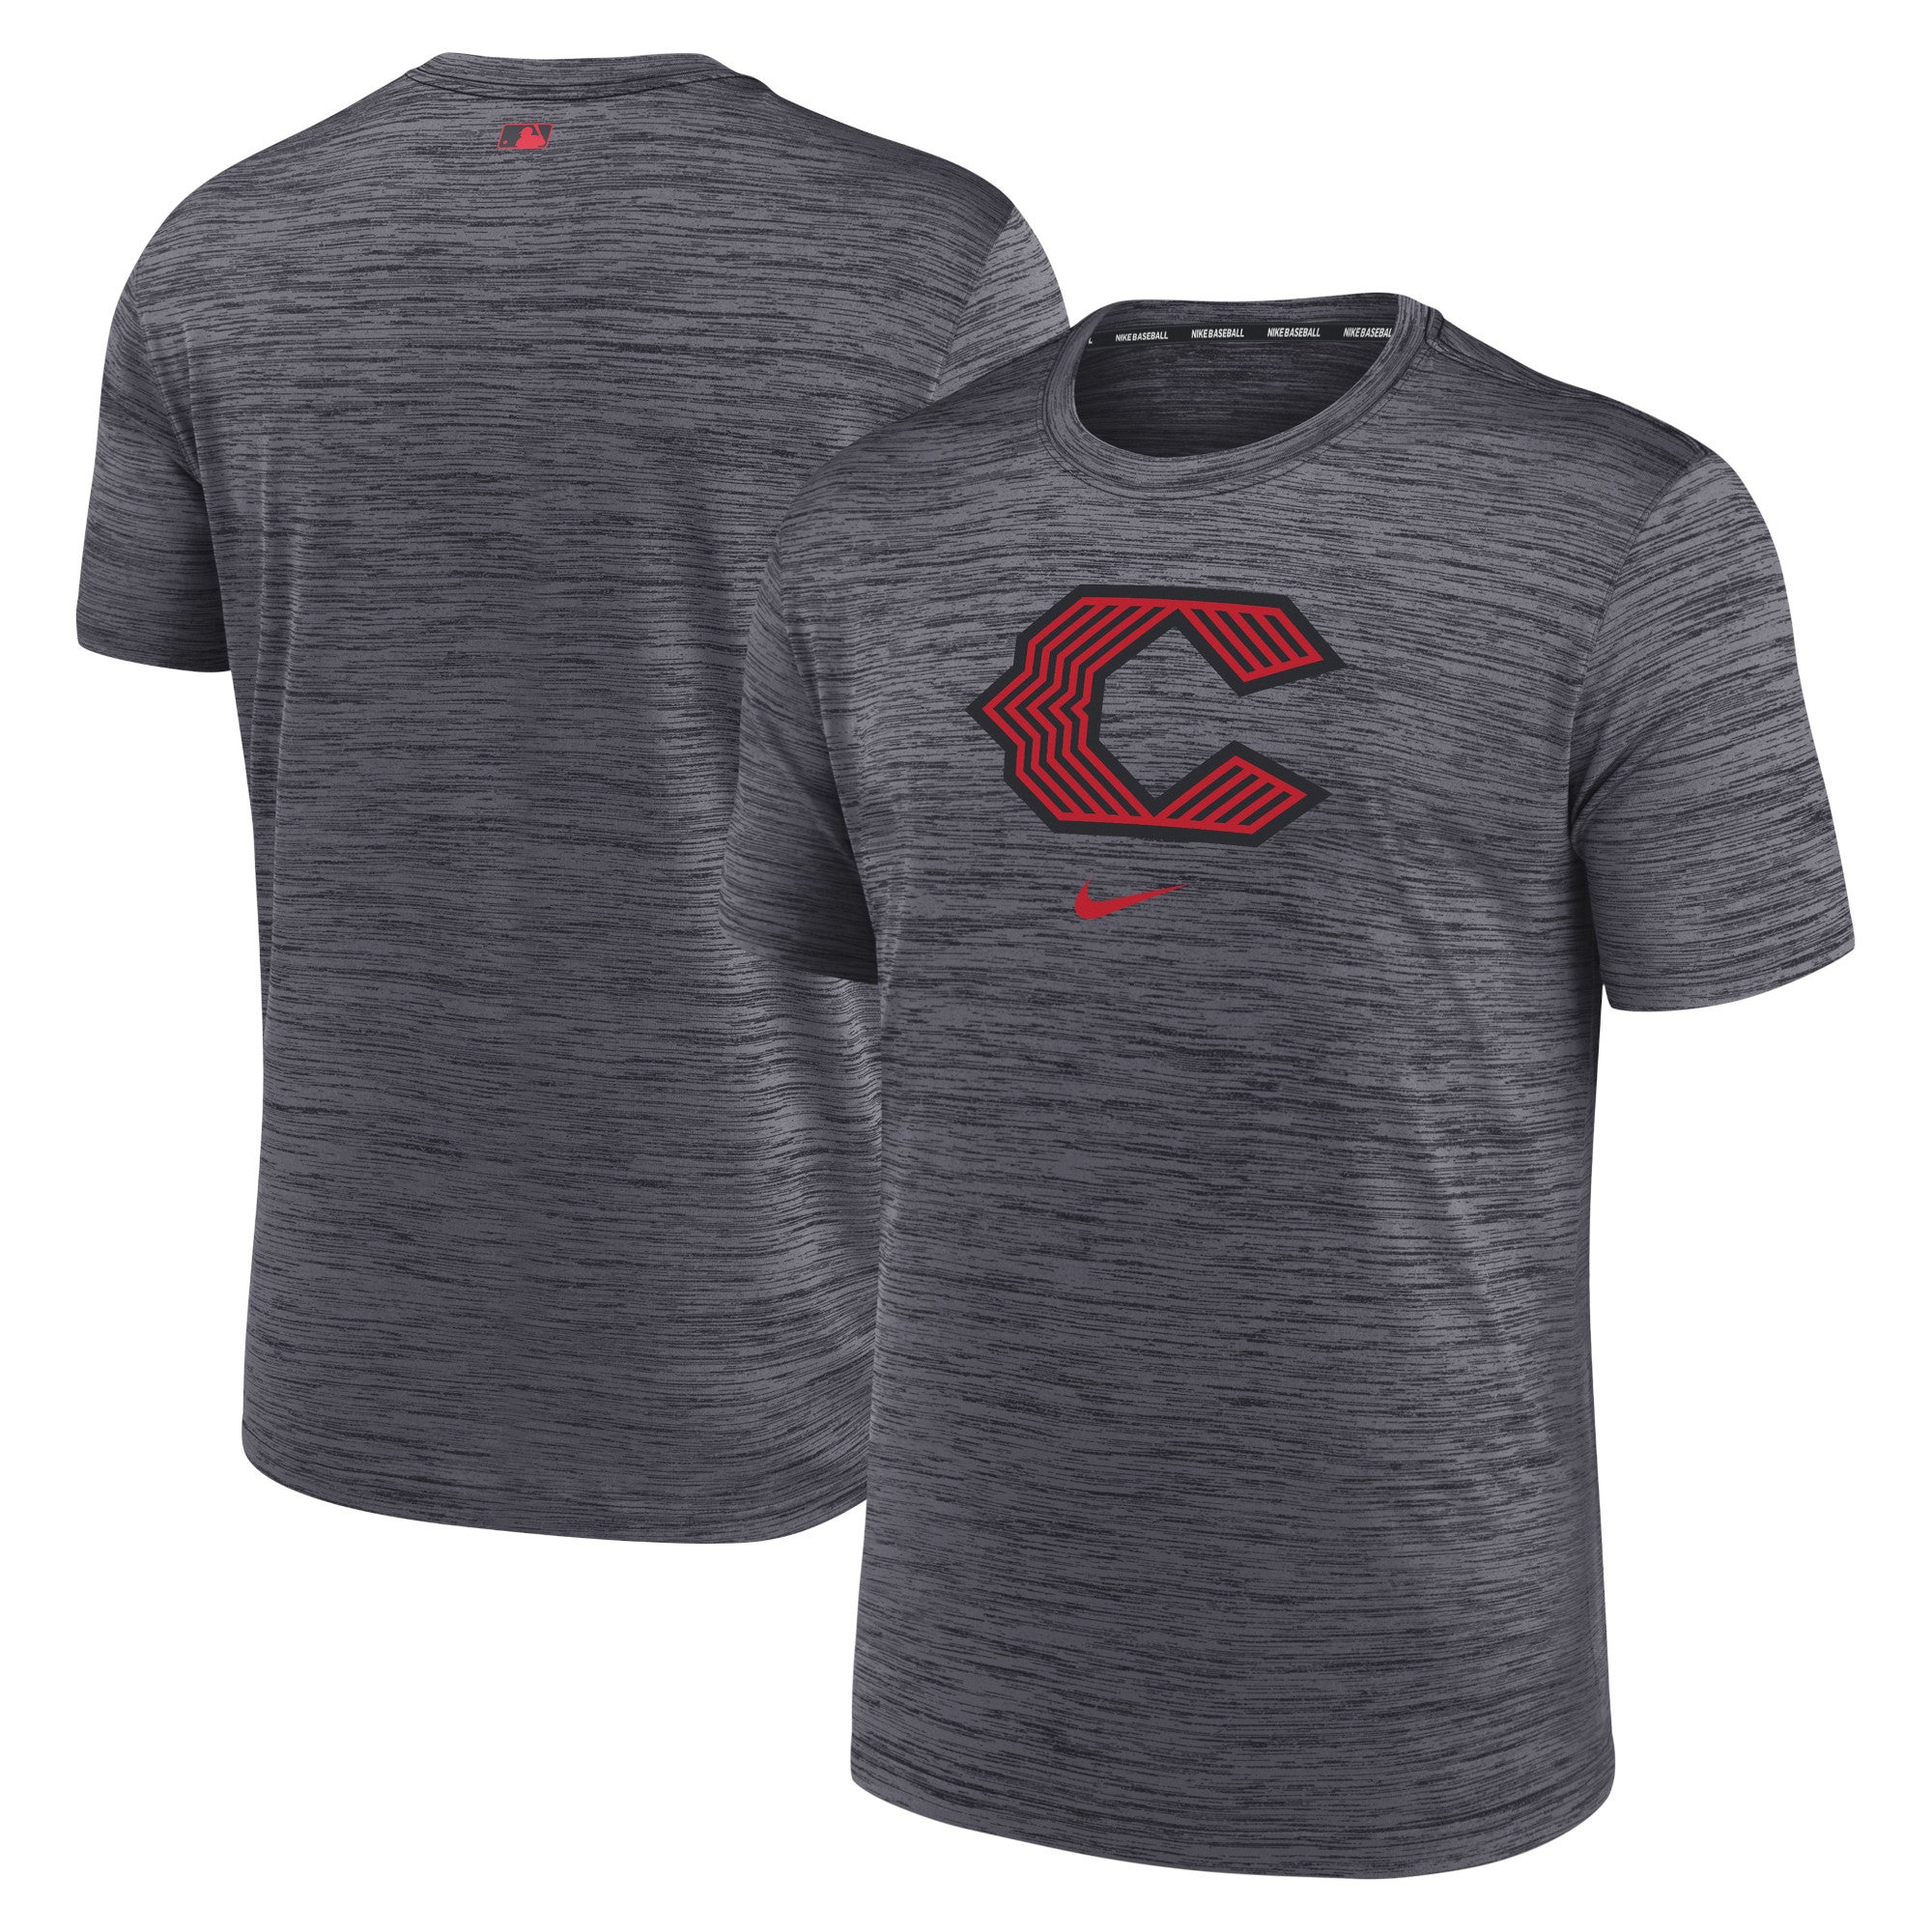 Nike Dri-FIT Team Legend (MLB Boston Red Sox) Men's Long-Sleeve T-Shirt.